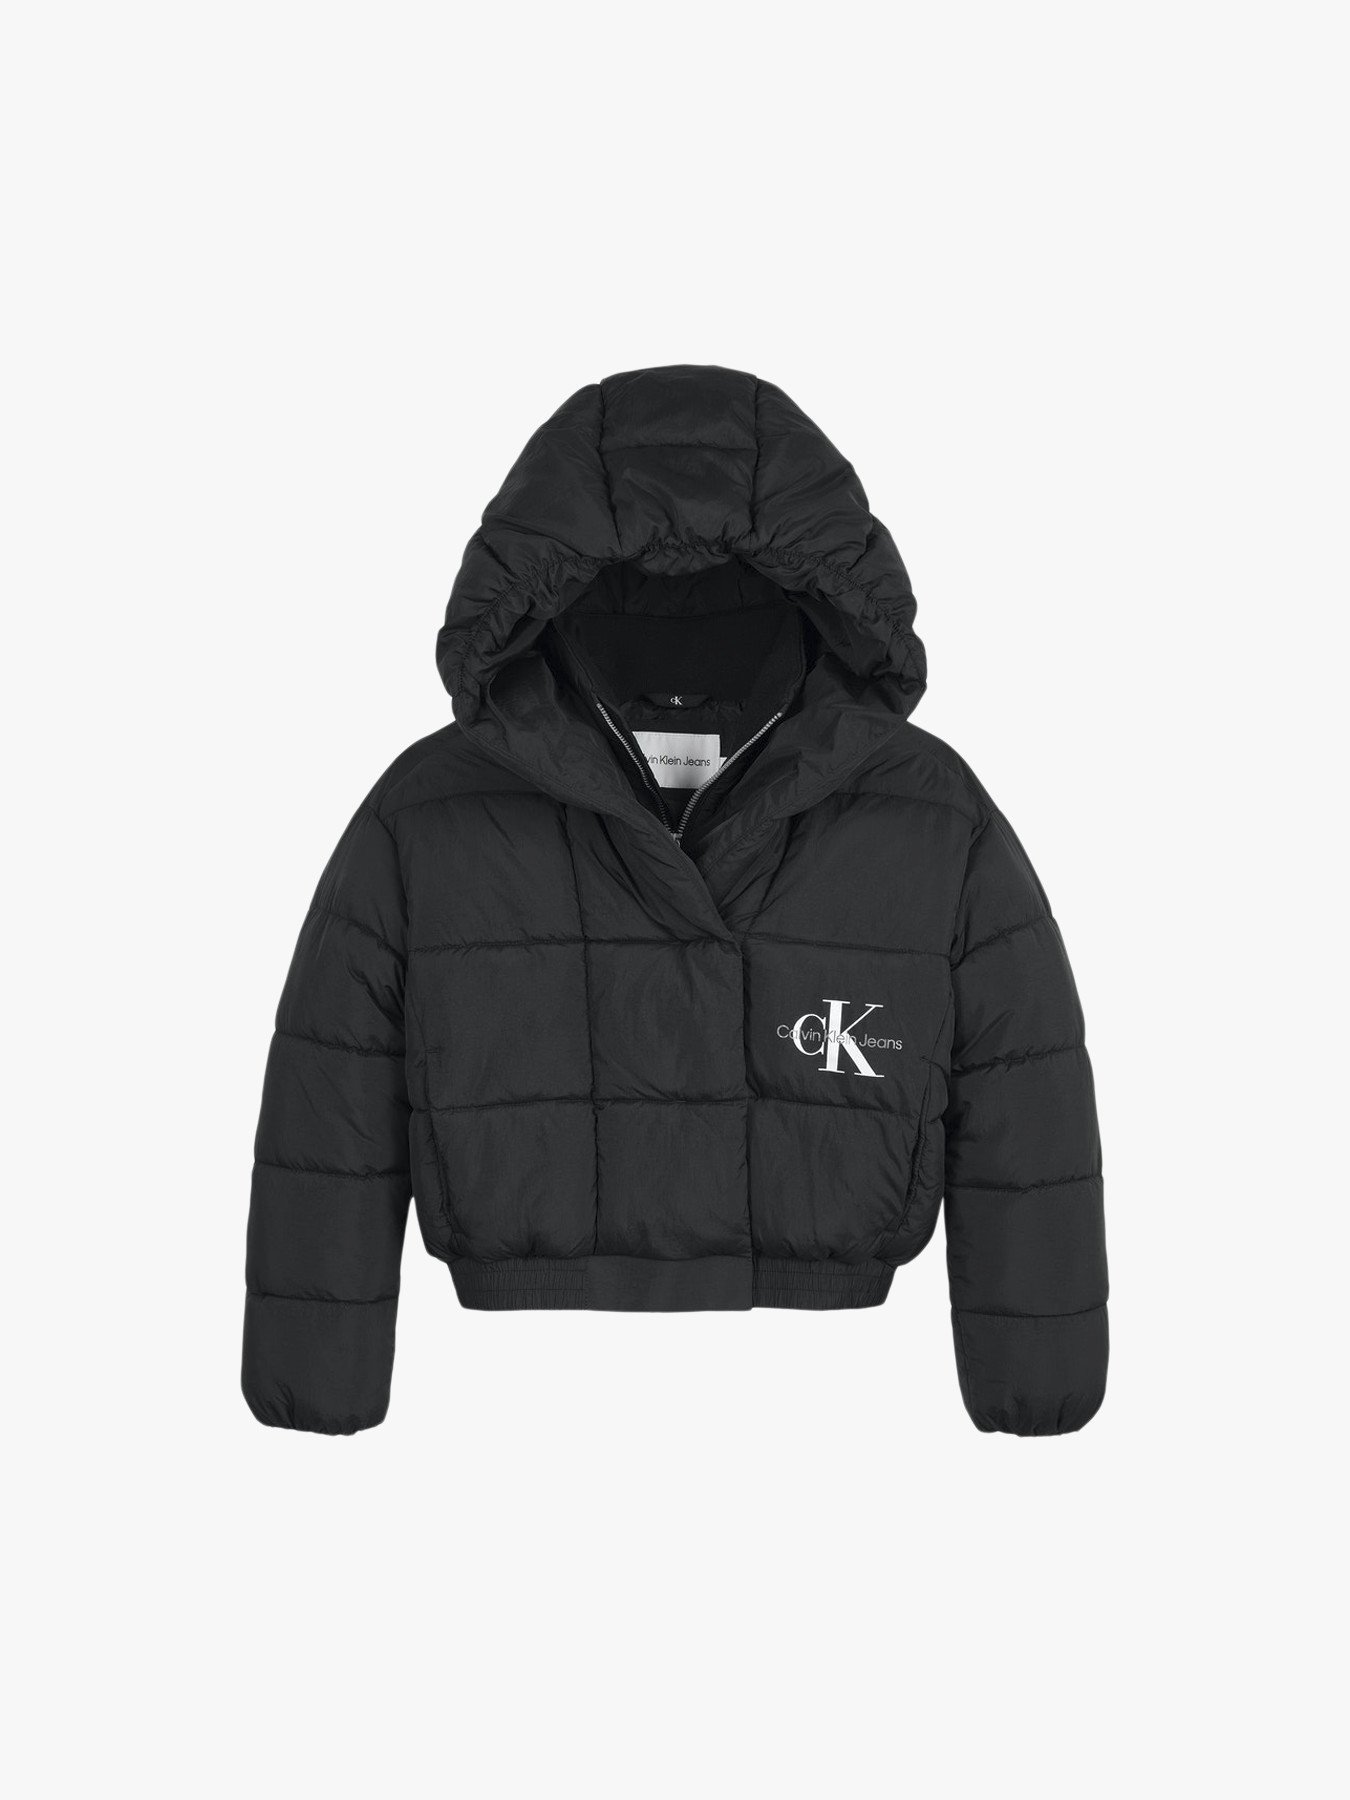 Calvin Klein Jeans CK Archive Puffer Jacket | Coats & Jackets | Fenwick